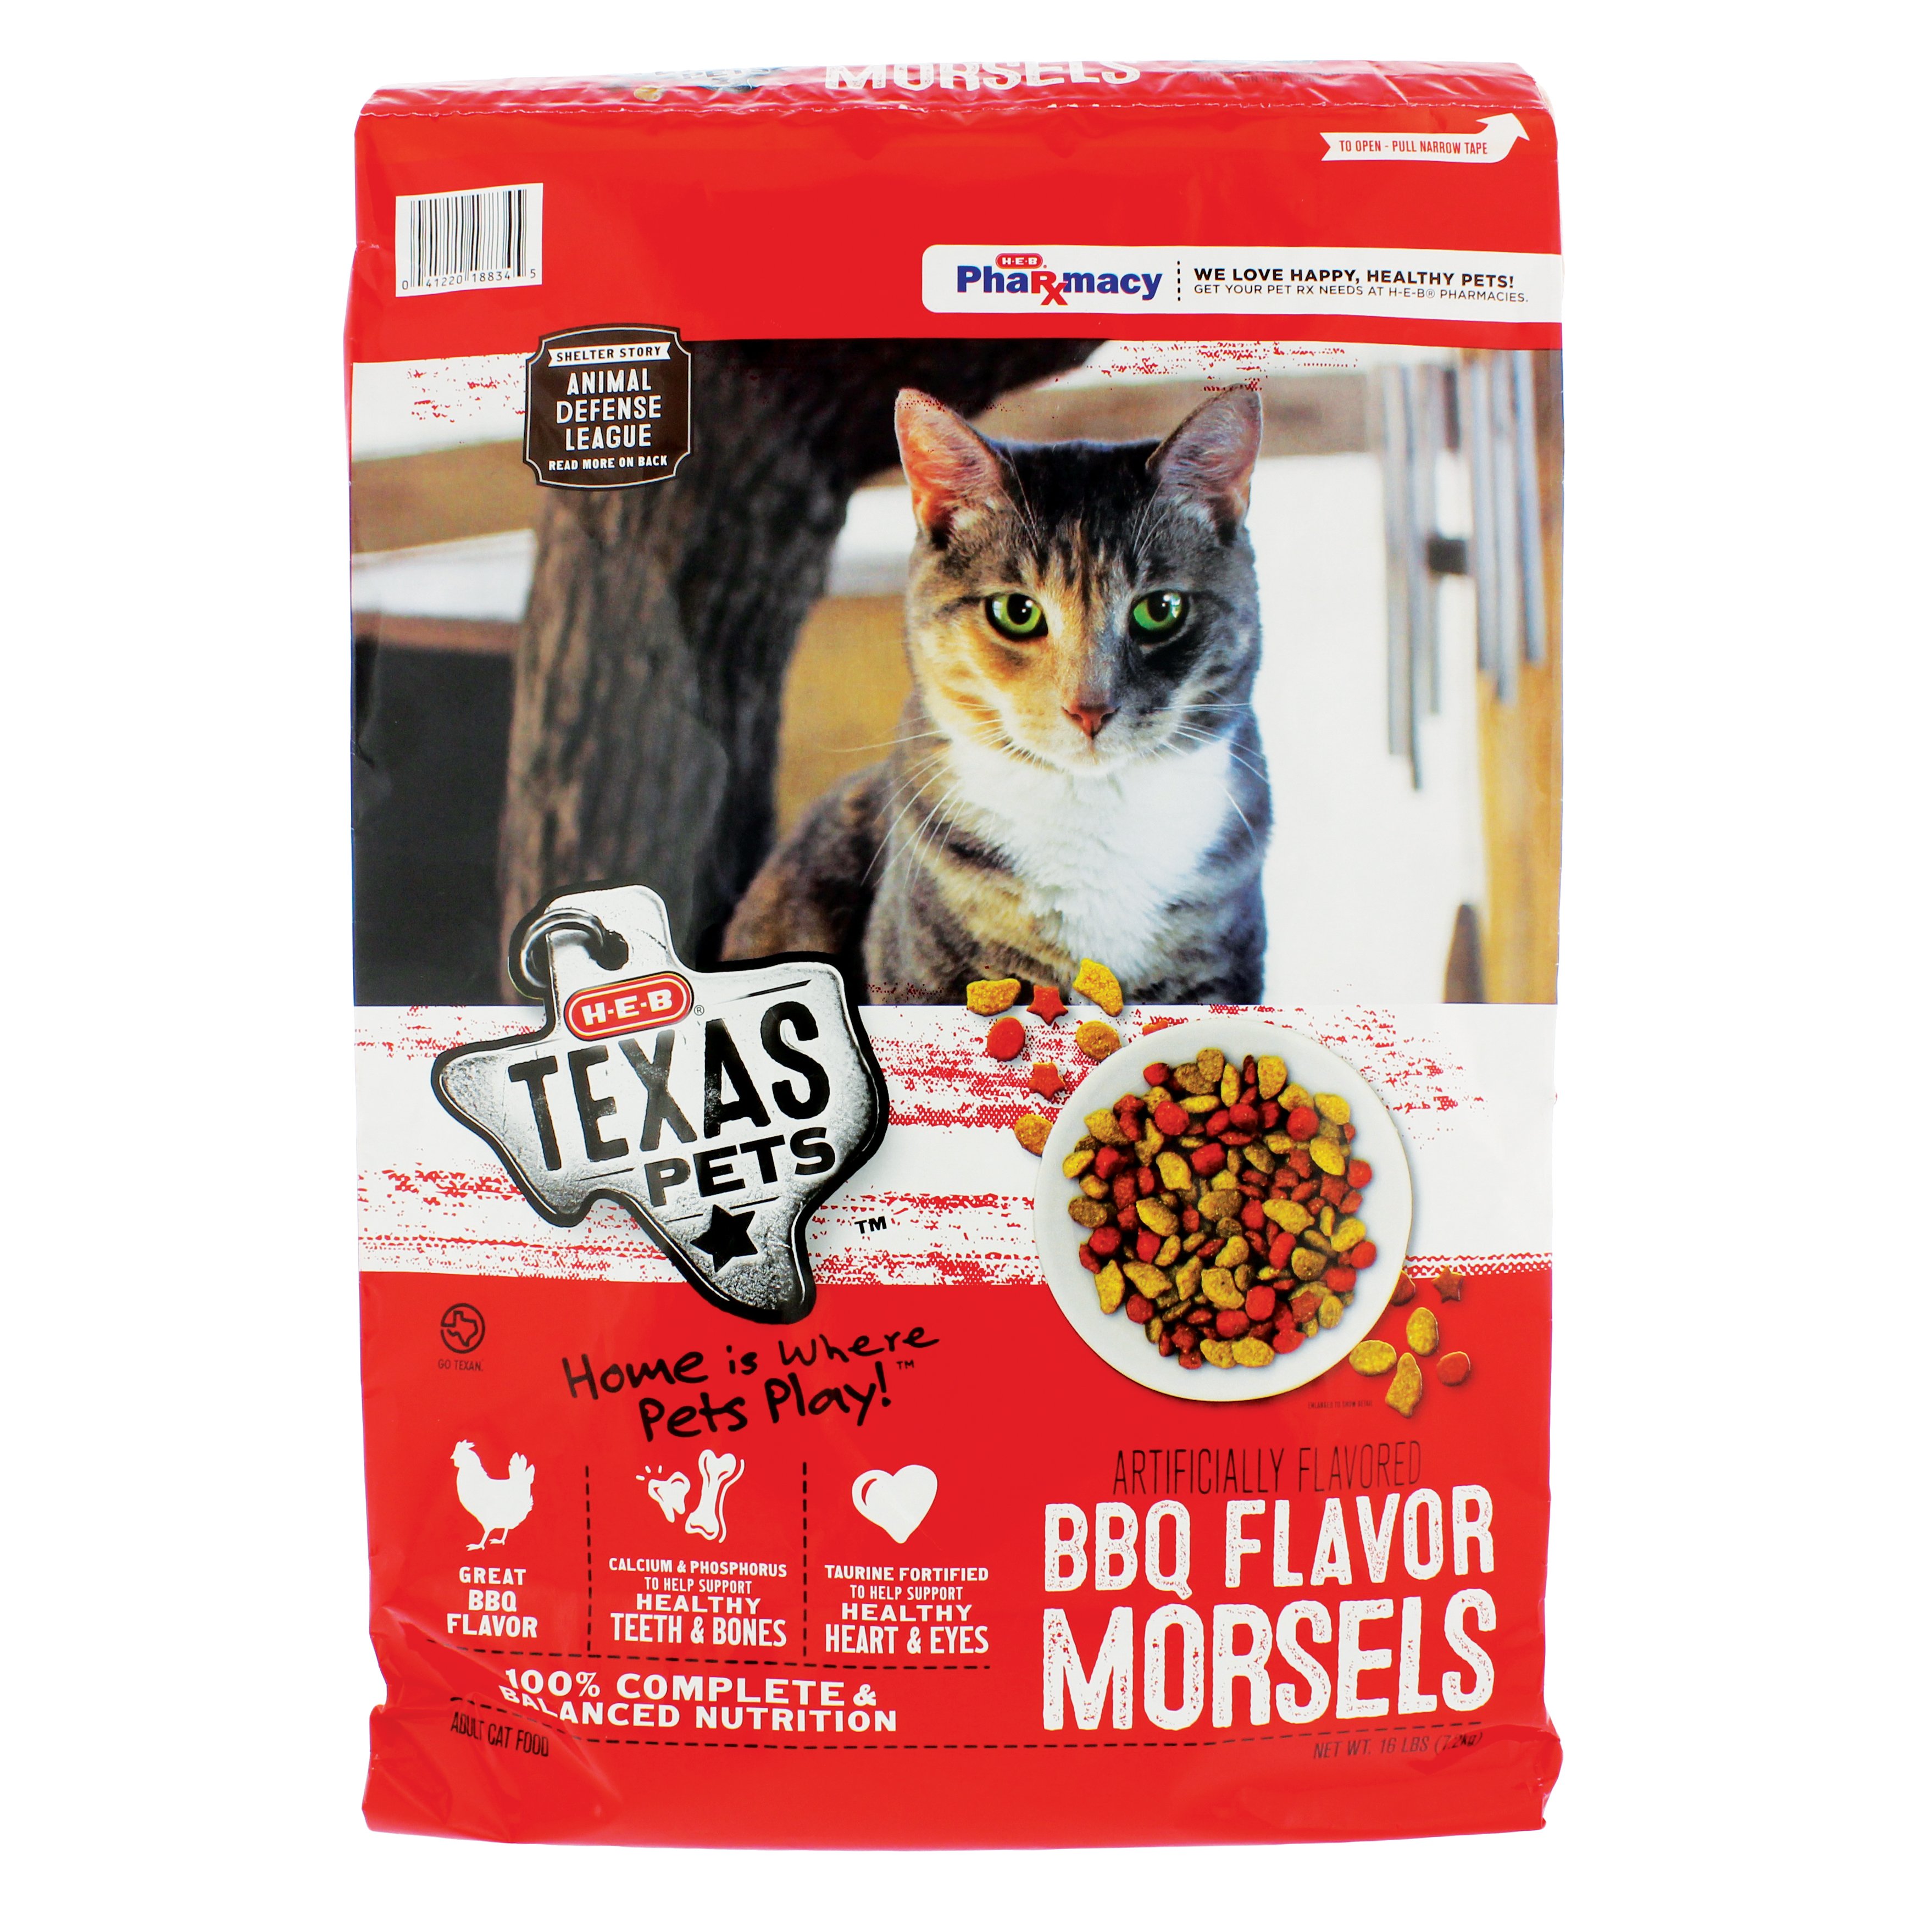 HEB Texas Pets BBQ Flavor Morsels Dry Cat Food Shop Cats at HEB